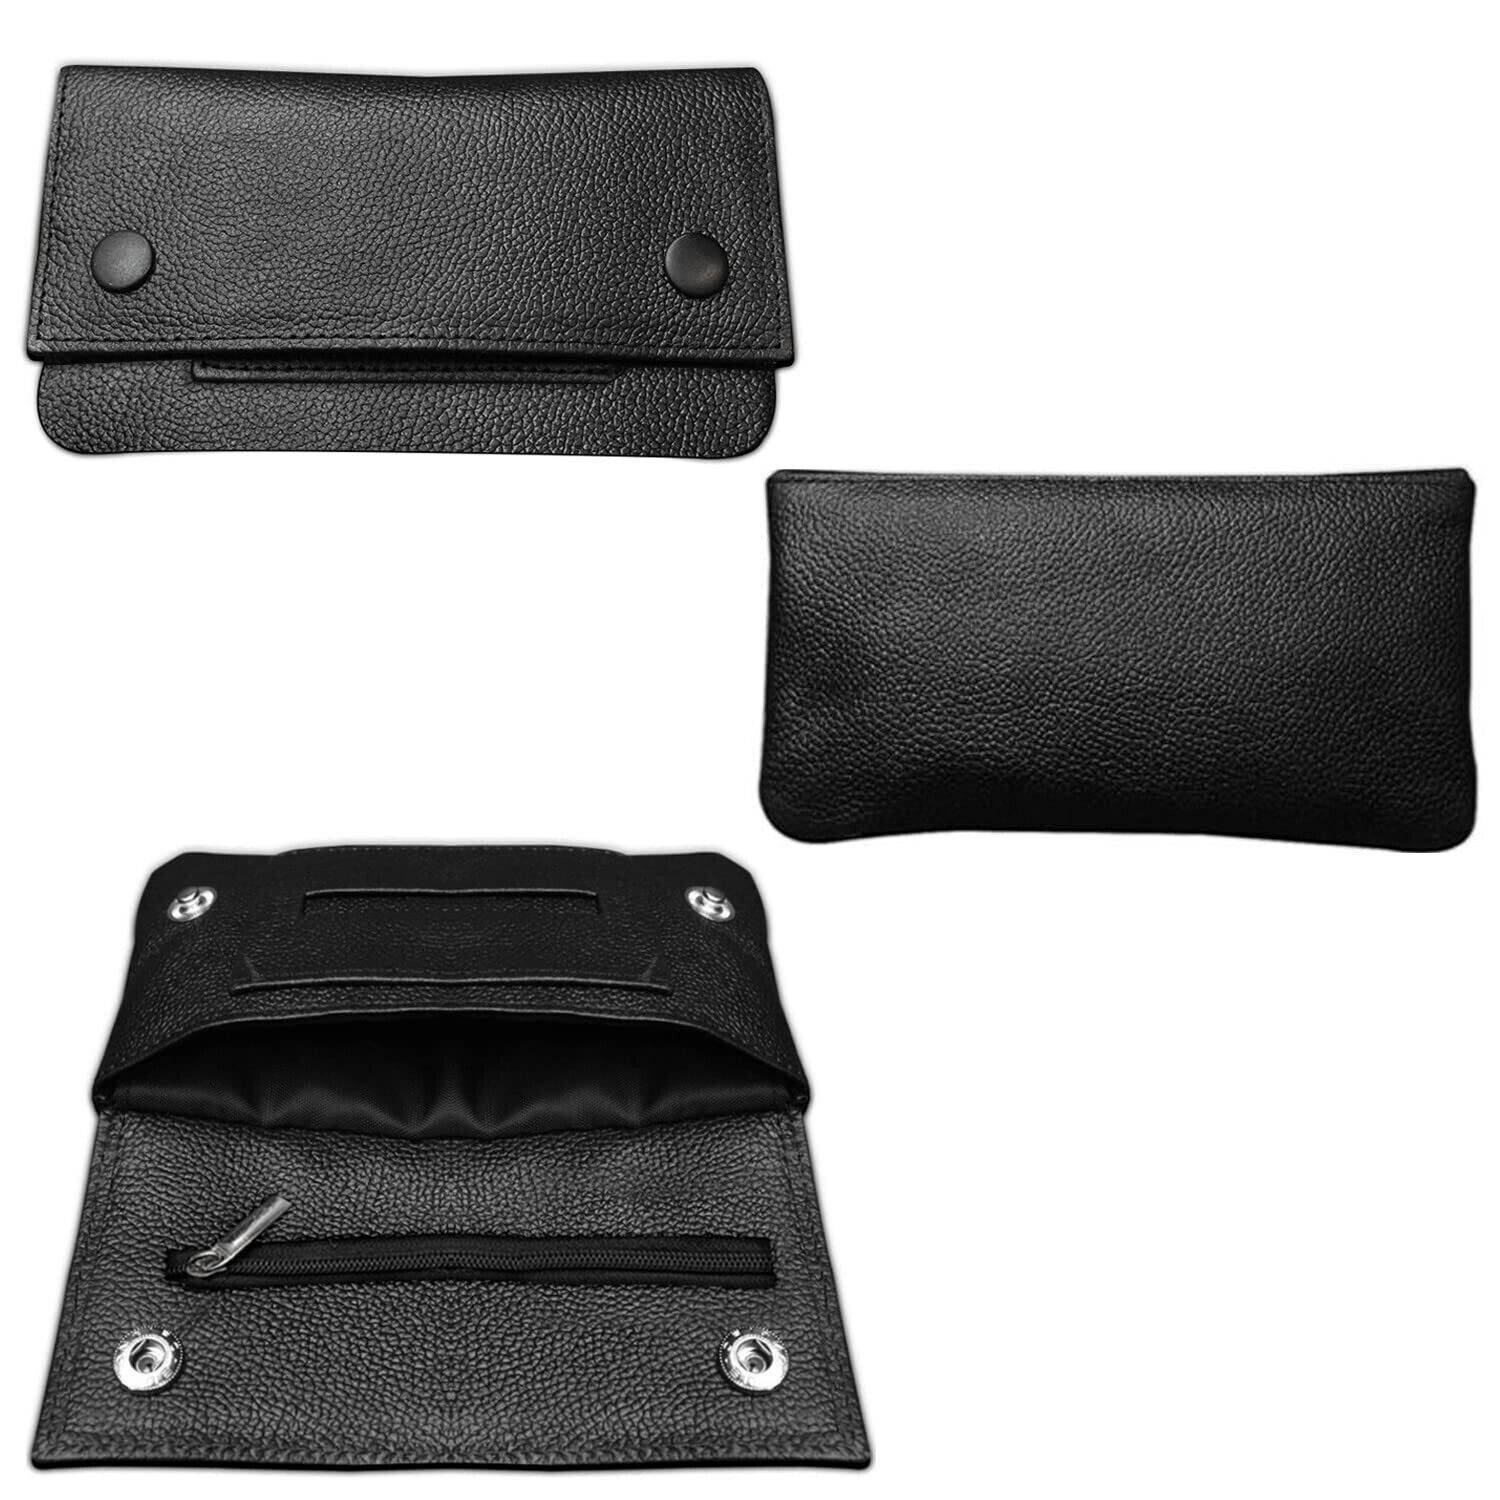 Cigratte Case Full Black Leather Tobacco Rolling Paper Slot Zipper Snap Close US